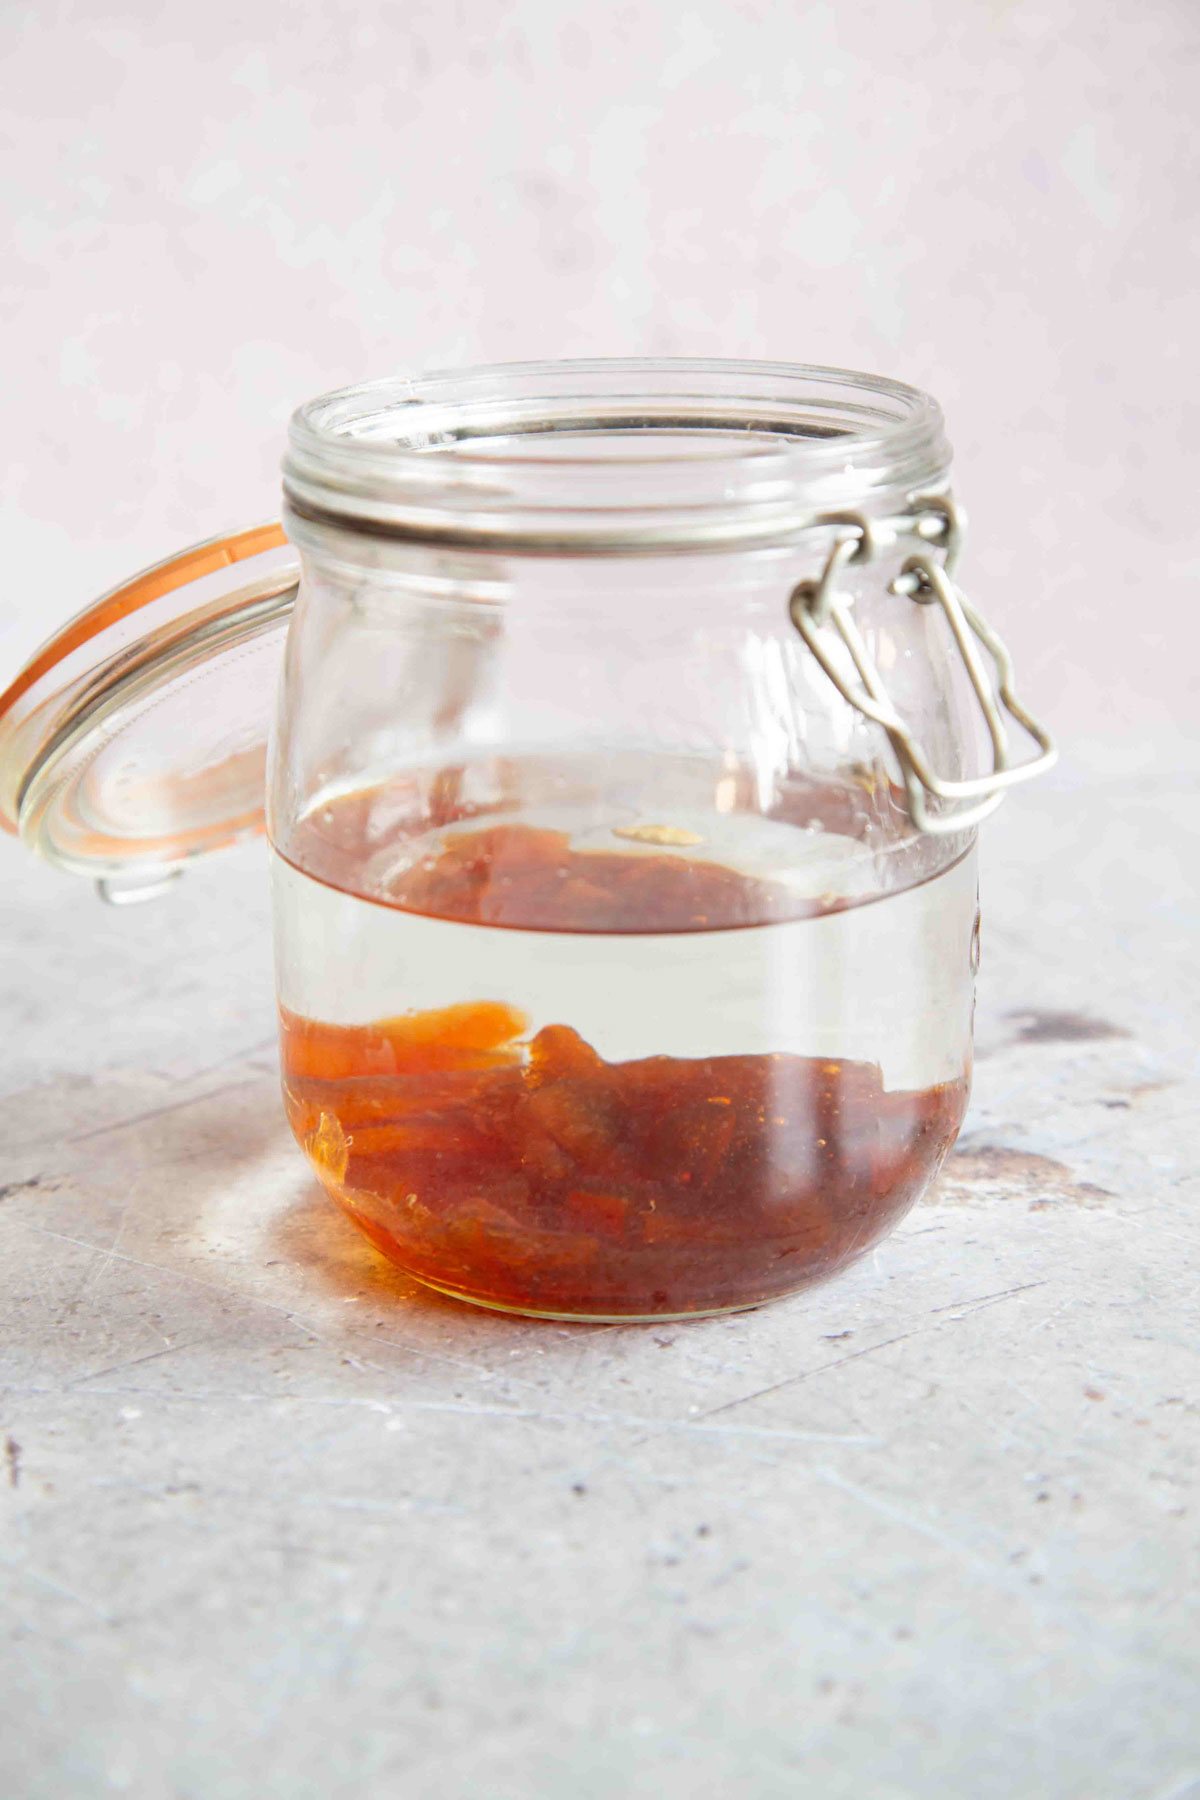 The marmalade, cardamon and vodka in a Kilner jar.